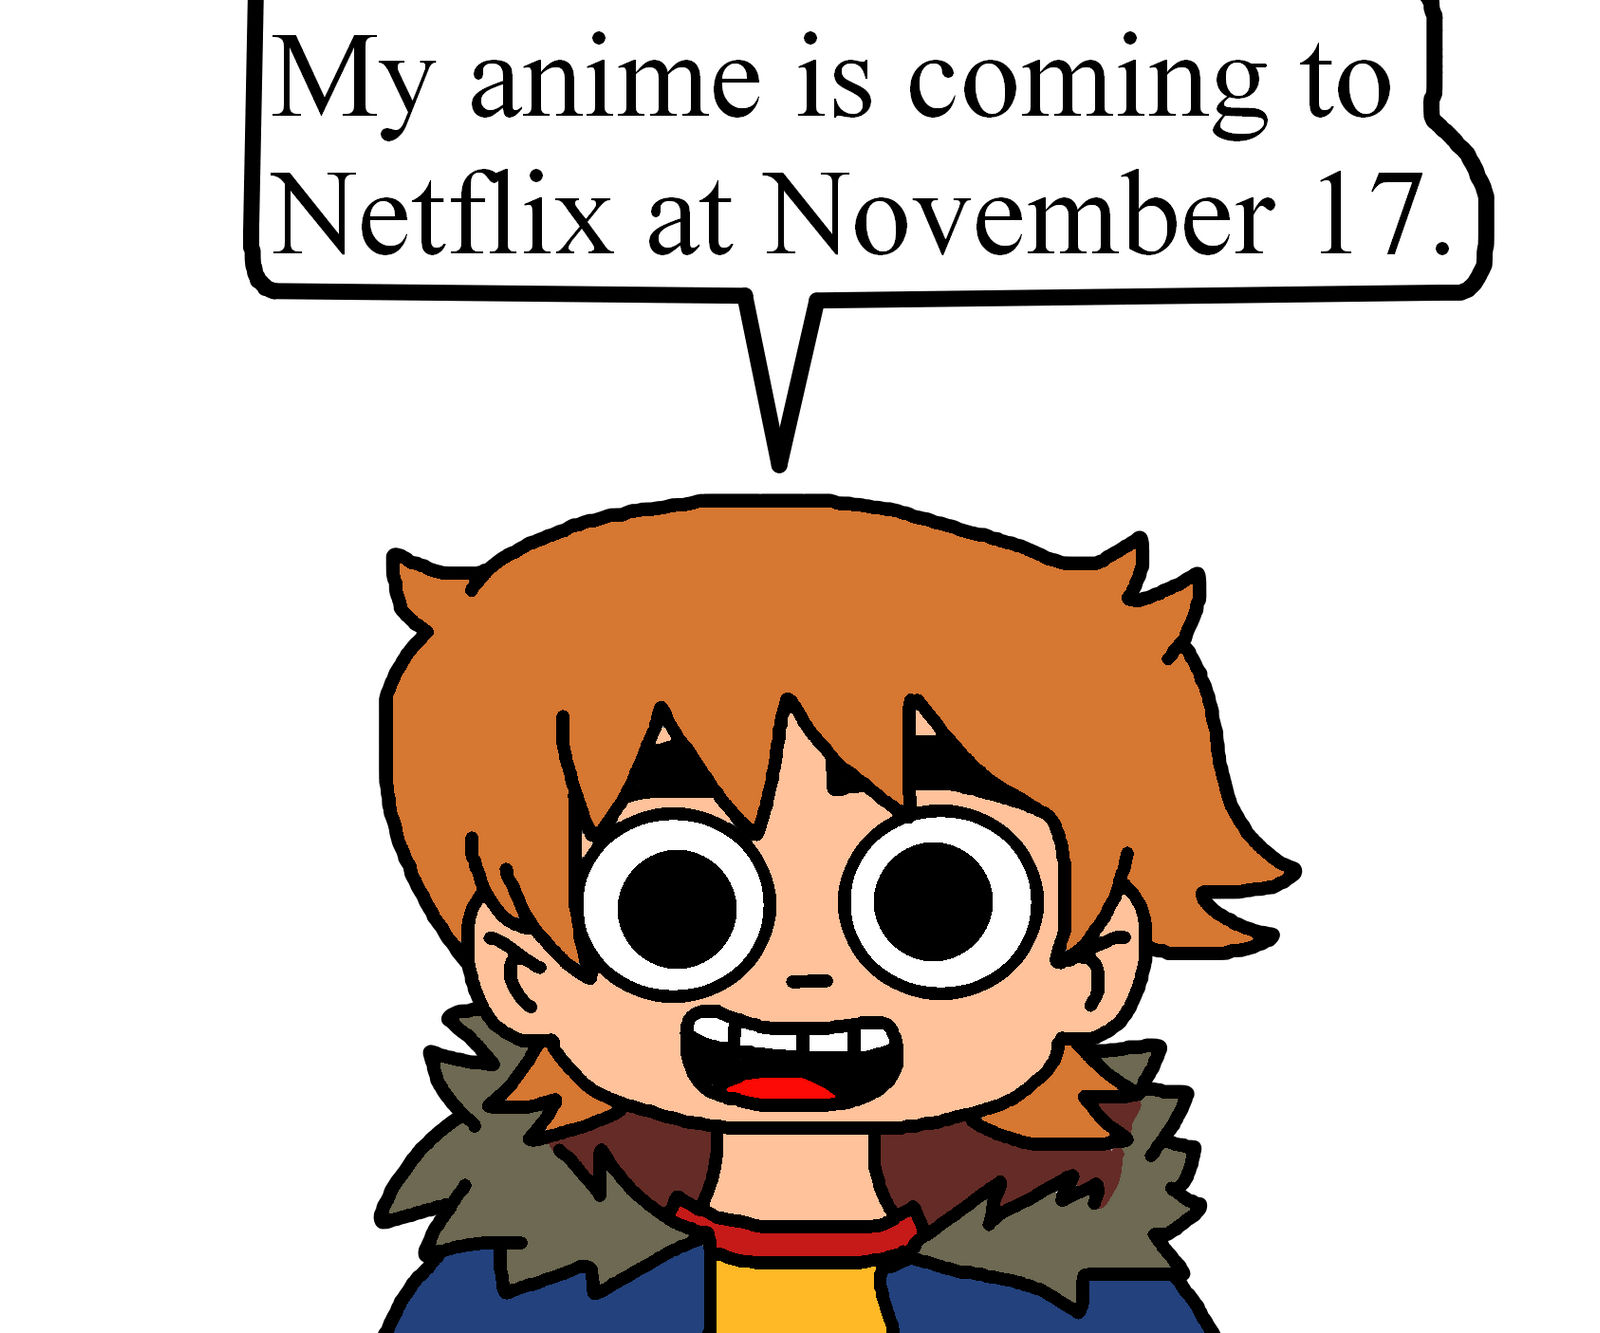 Scott Pilgrim Anime Series Announced - Netflix Tudum